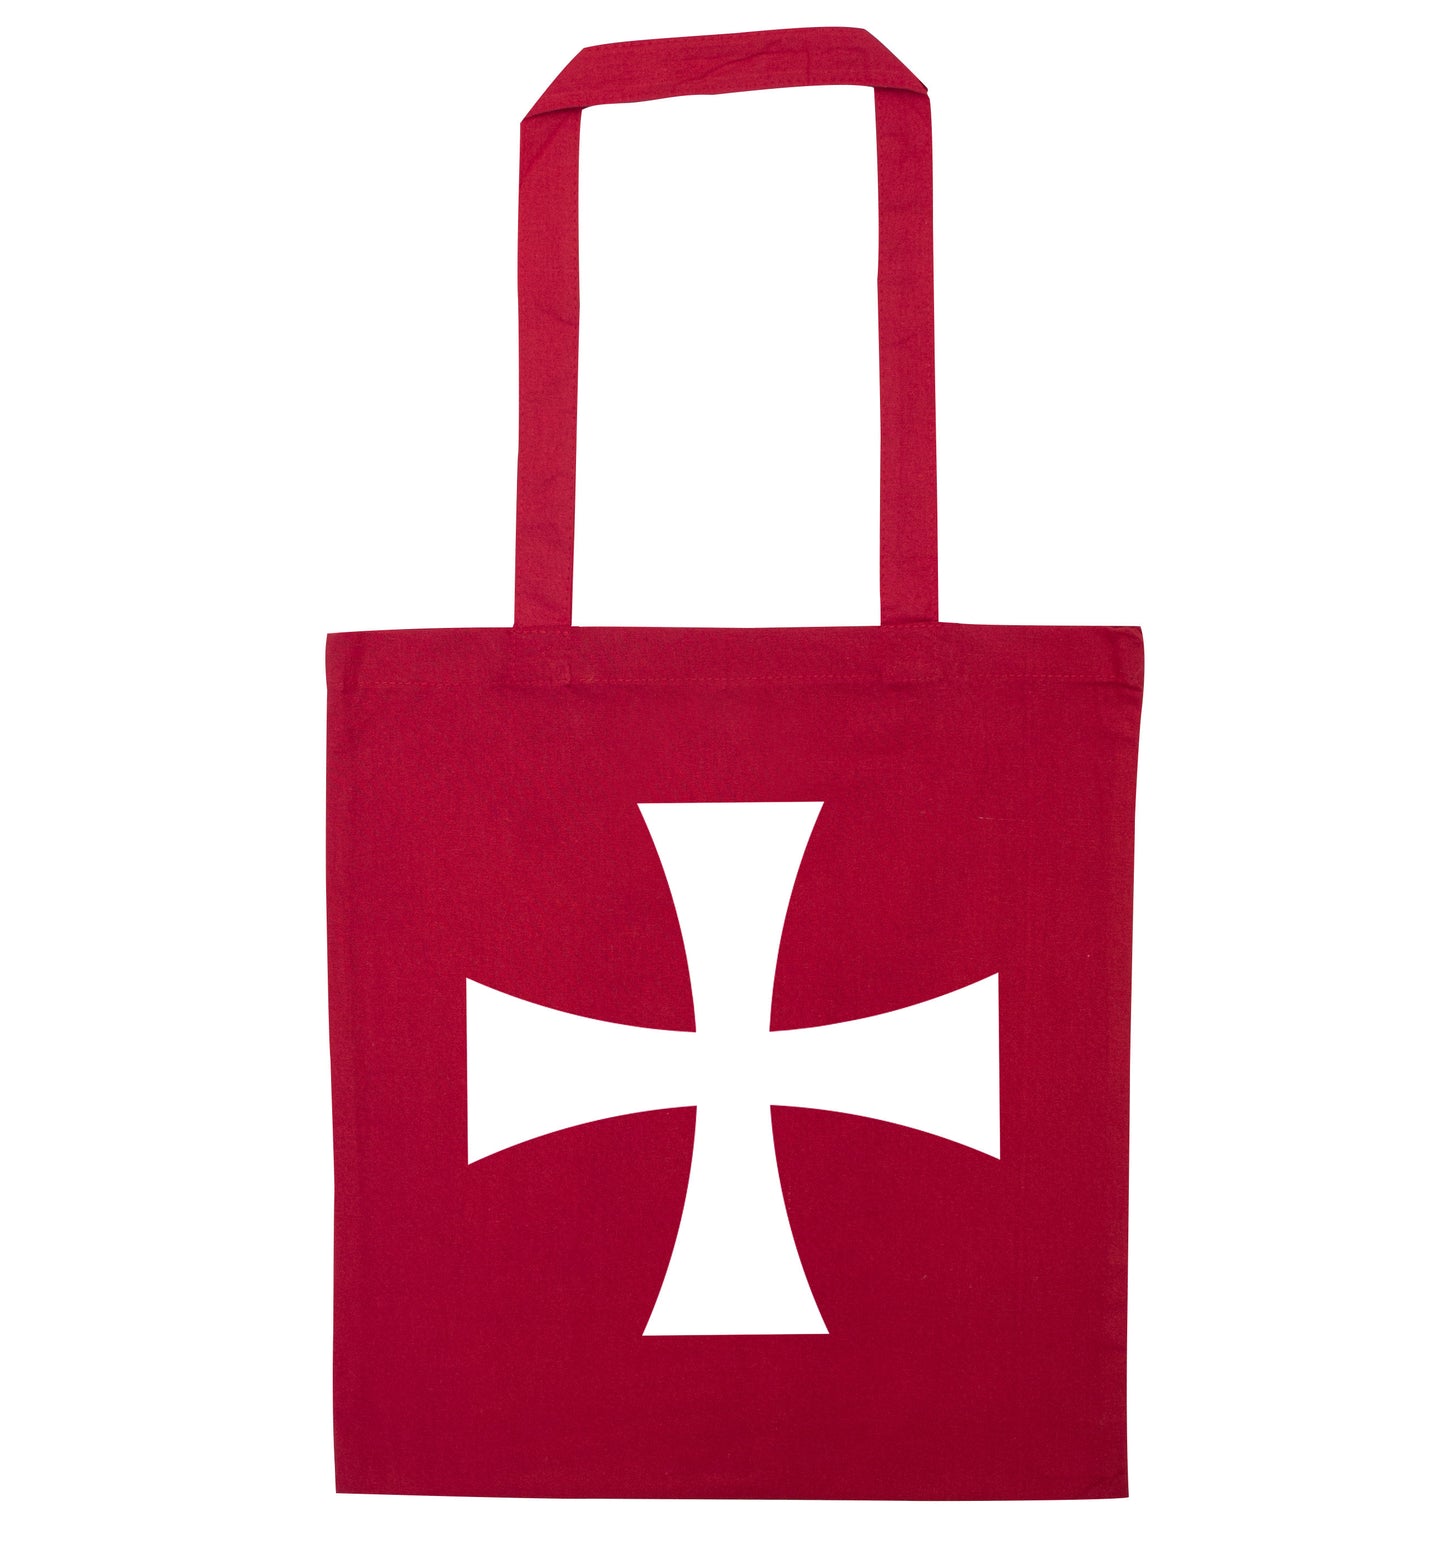 Knights Templar cross red tote bag